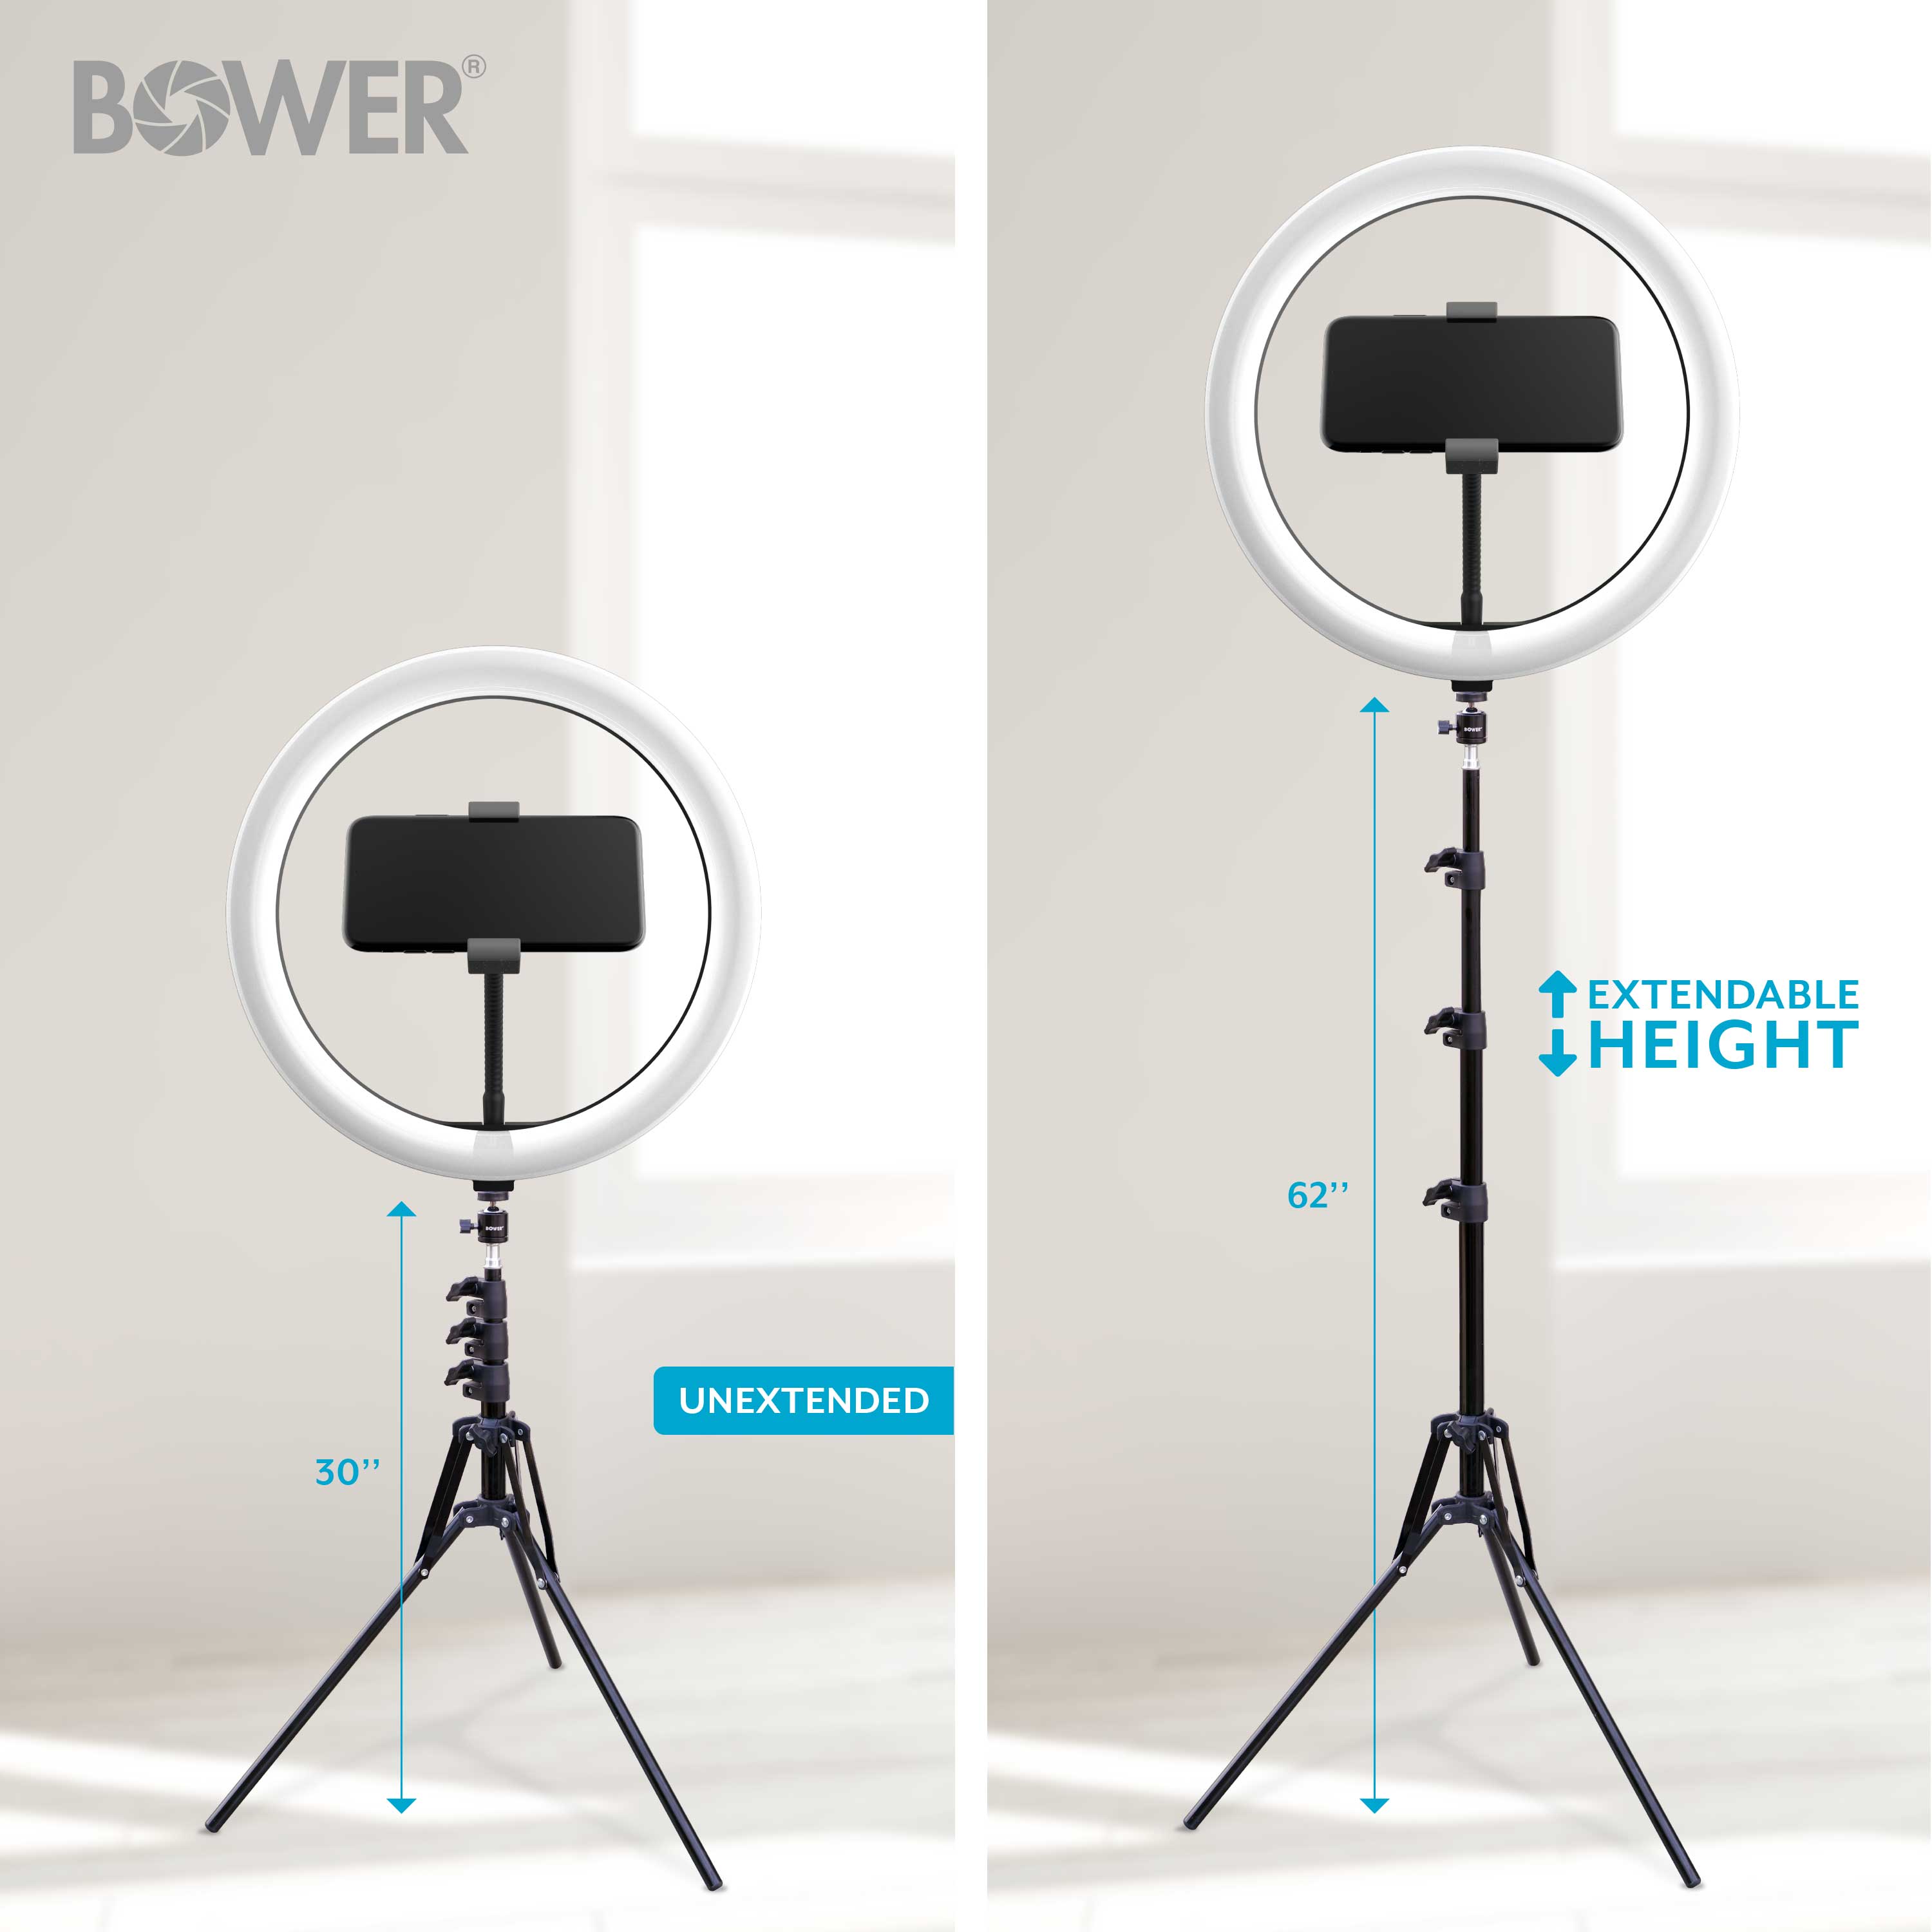 Bower 12” Studio Light USB Power Ball-Head Mount 62" Adjustable Tripod 3 Colors 10 Brightness Levels In-Line Remote - image 4 of 7